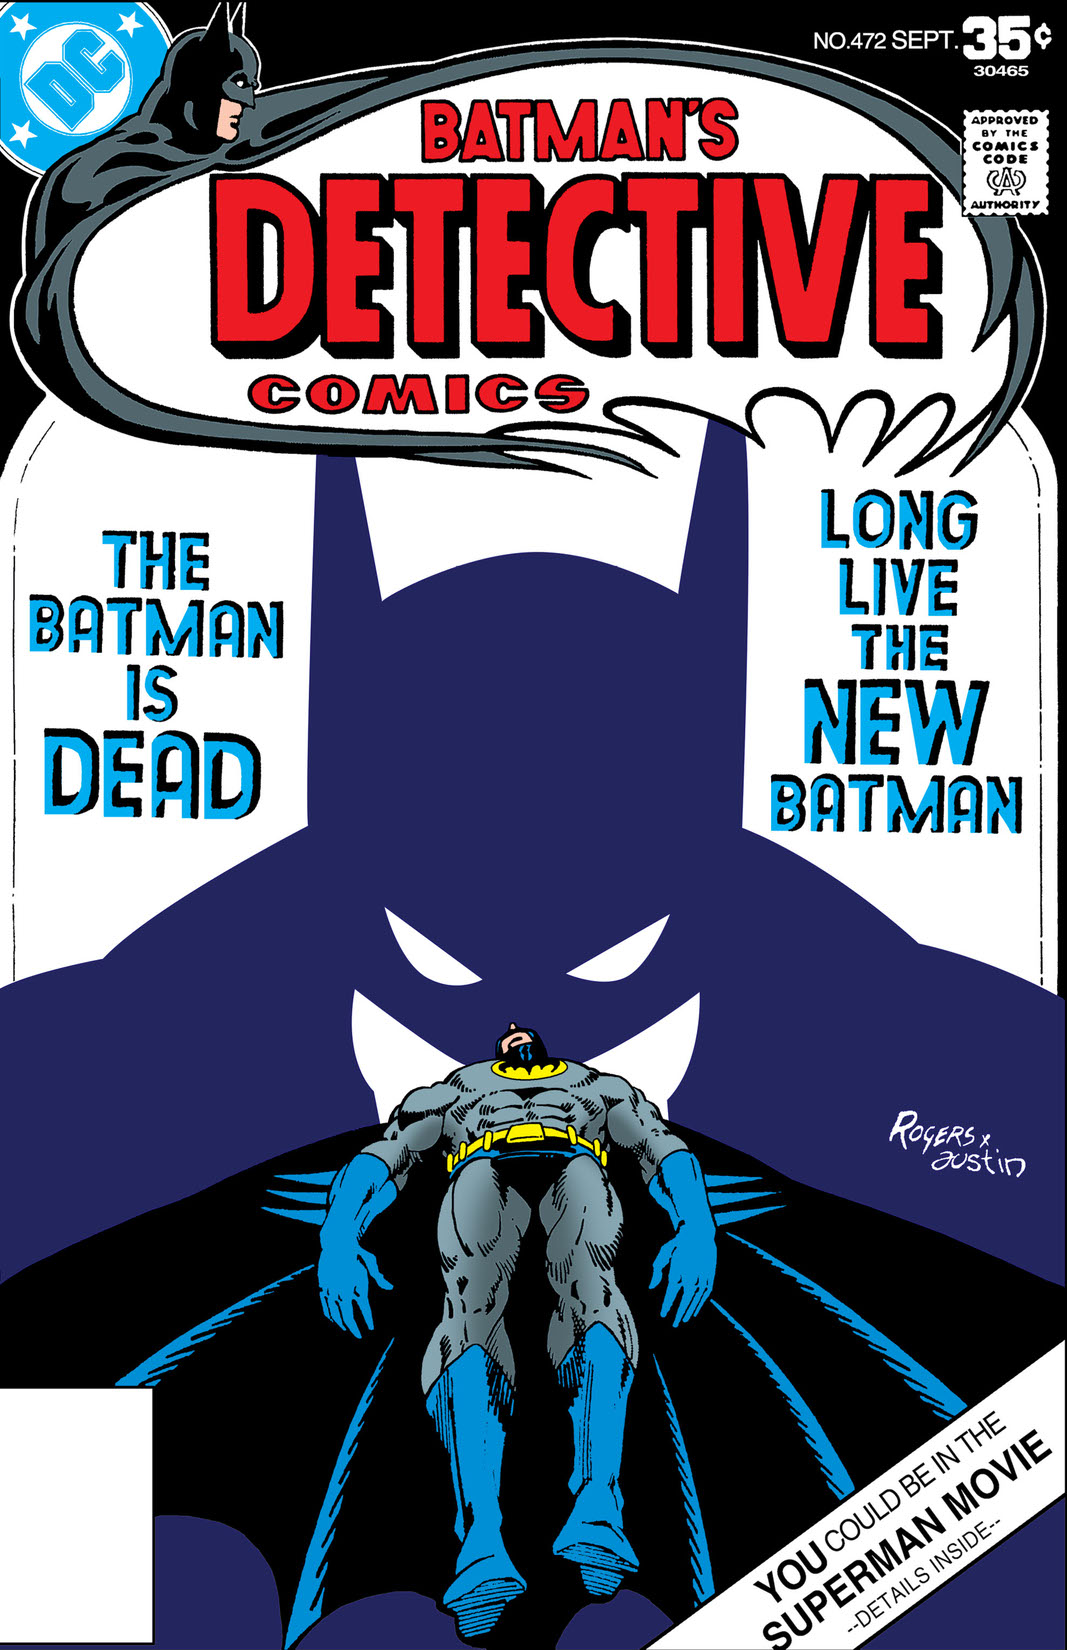 Detective Comics (1937-) #472 preview images